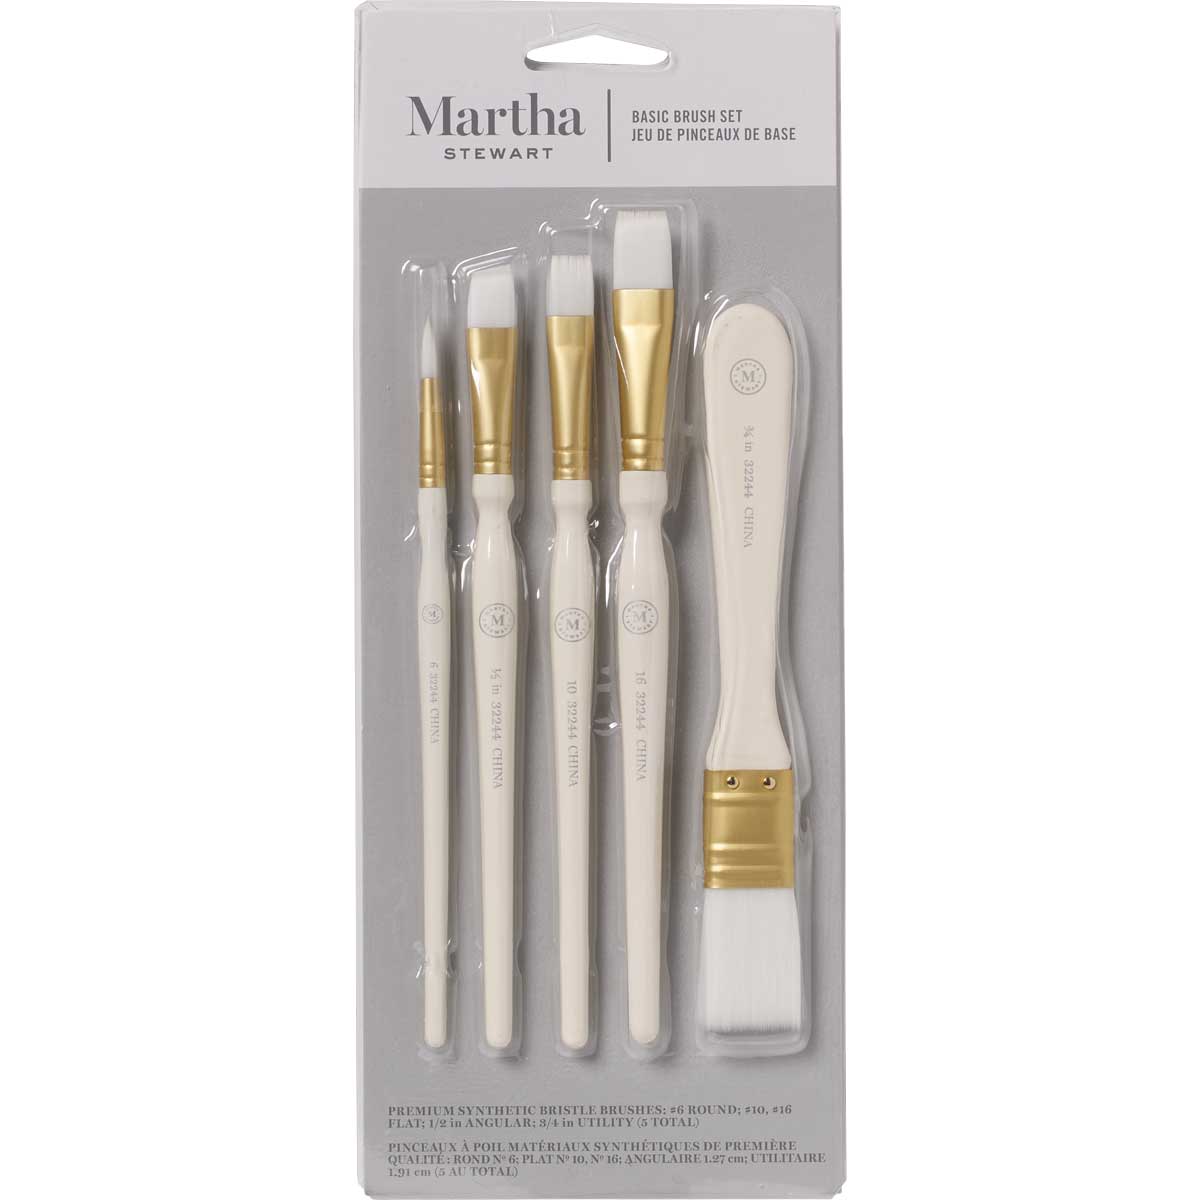 Martha Stewart ® Brush Sets - Basic Brush Set - 5 pc. - 32244